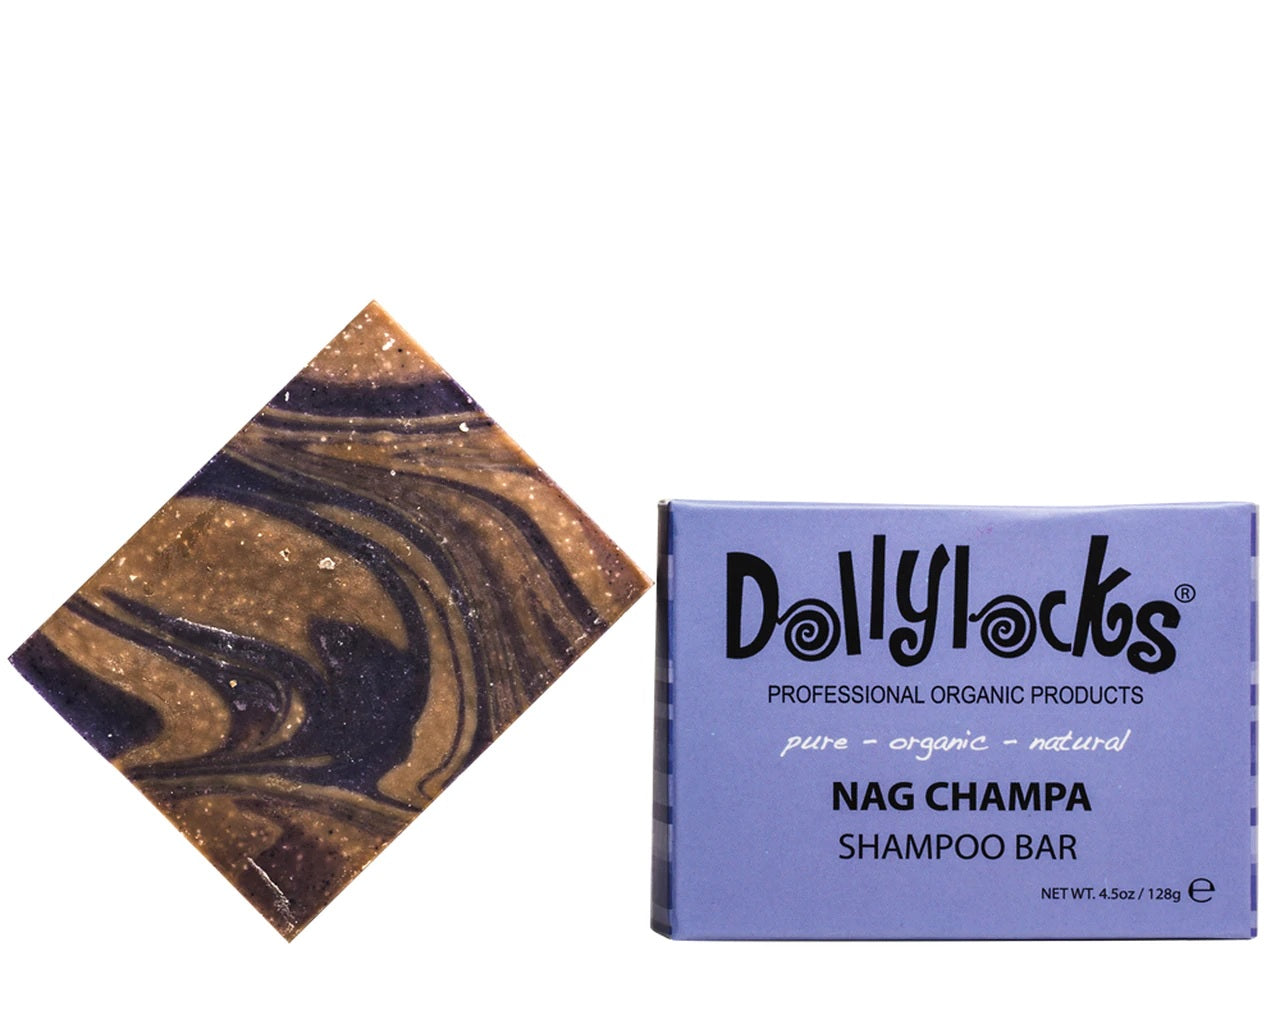 Dollylocks - Dreadlocks Shampoo Bar - Nag Champa (4.5oz/128g)